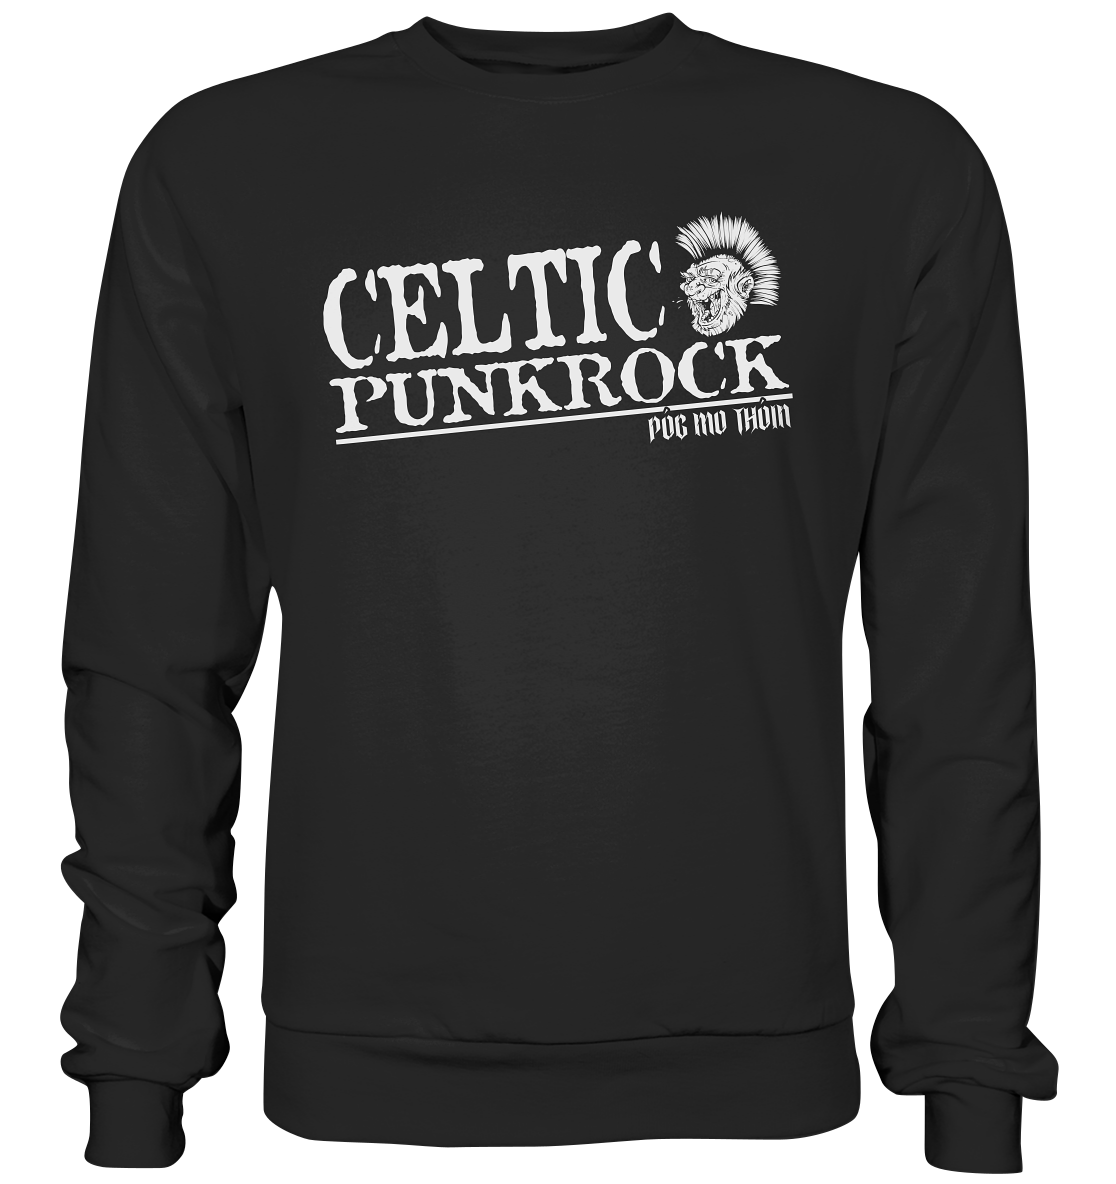 Póg Mo Thóin Streetwear "Celtic Punkrock" - Premium Sweatshirt